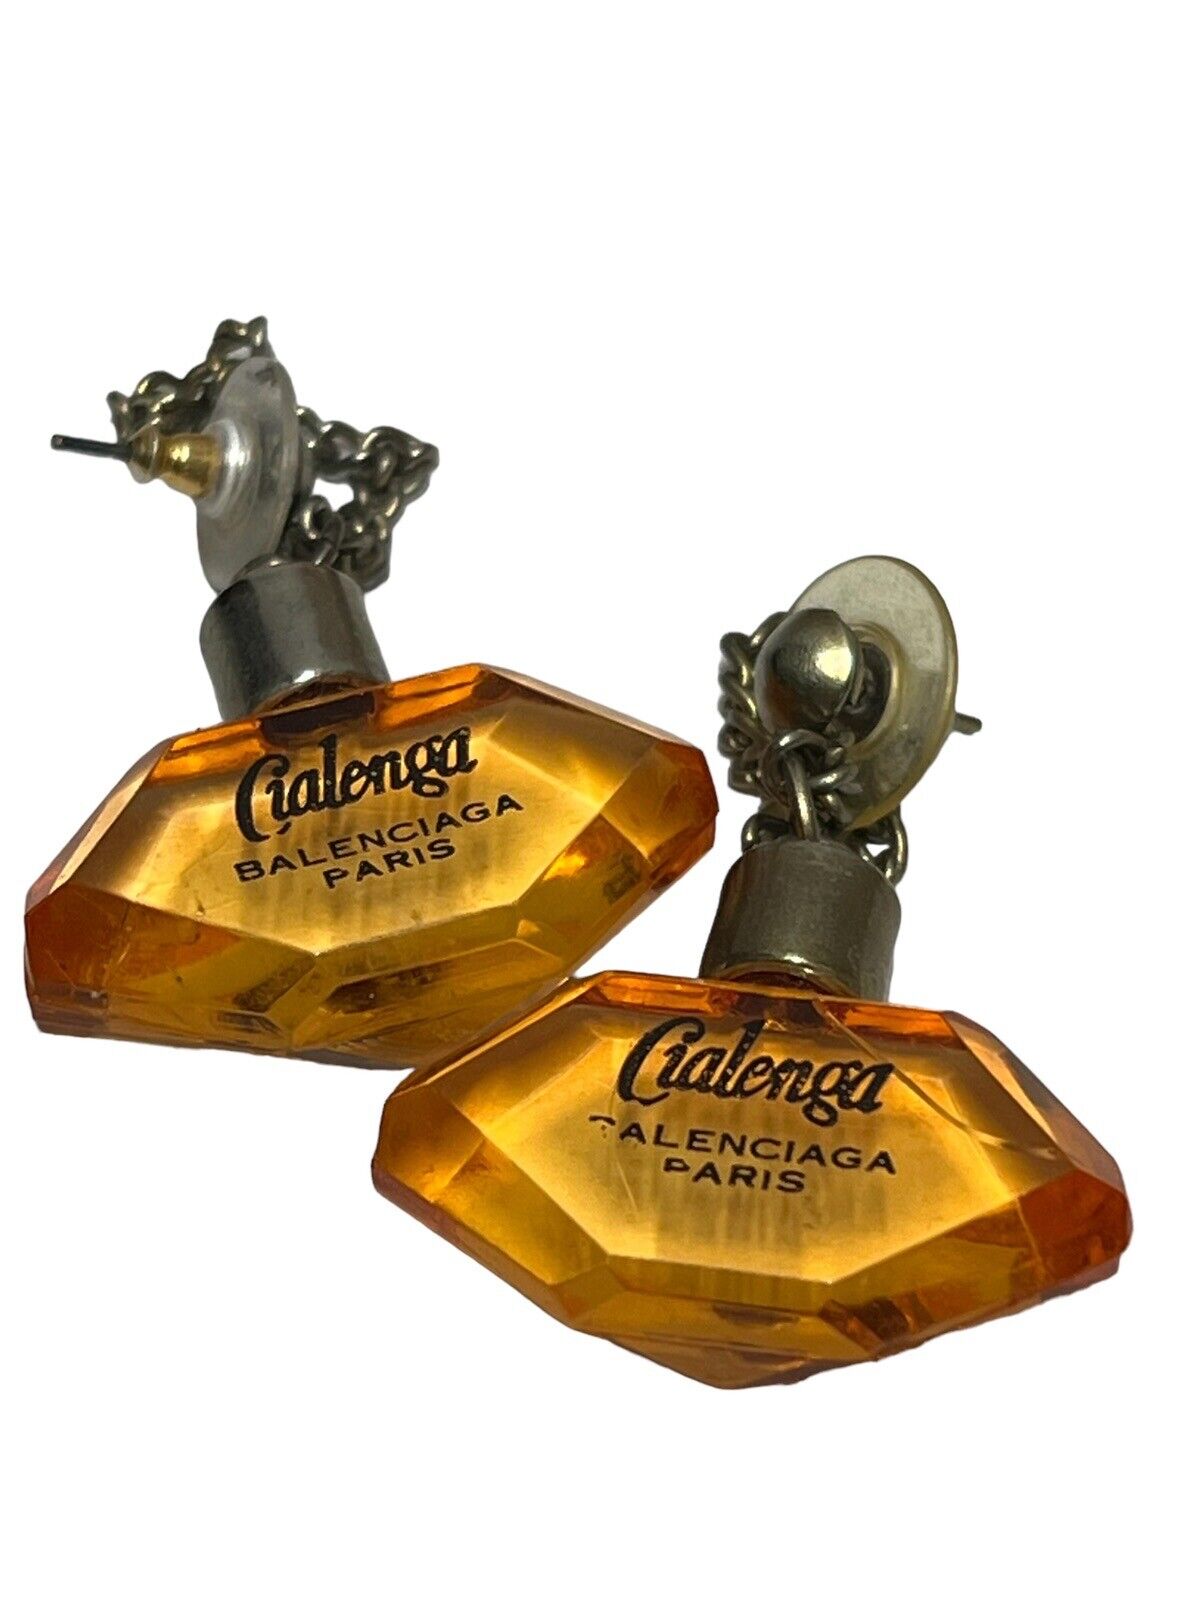 Cialenga by Balenciaga Paris Perfume Bottle Promotional Vintage Earrings Plastic